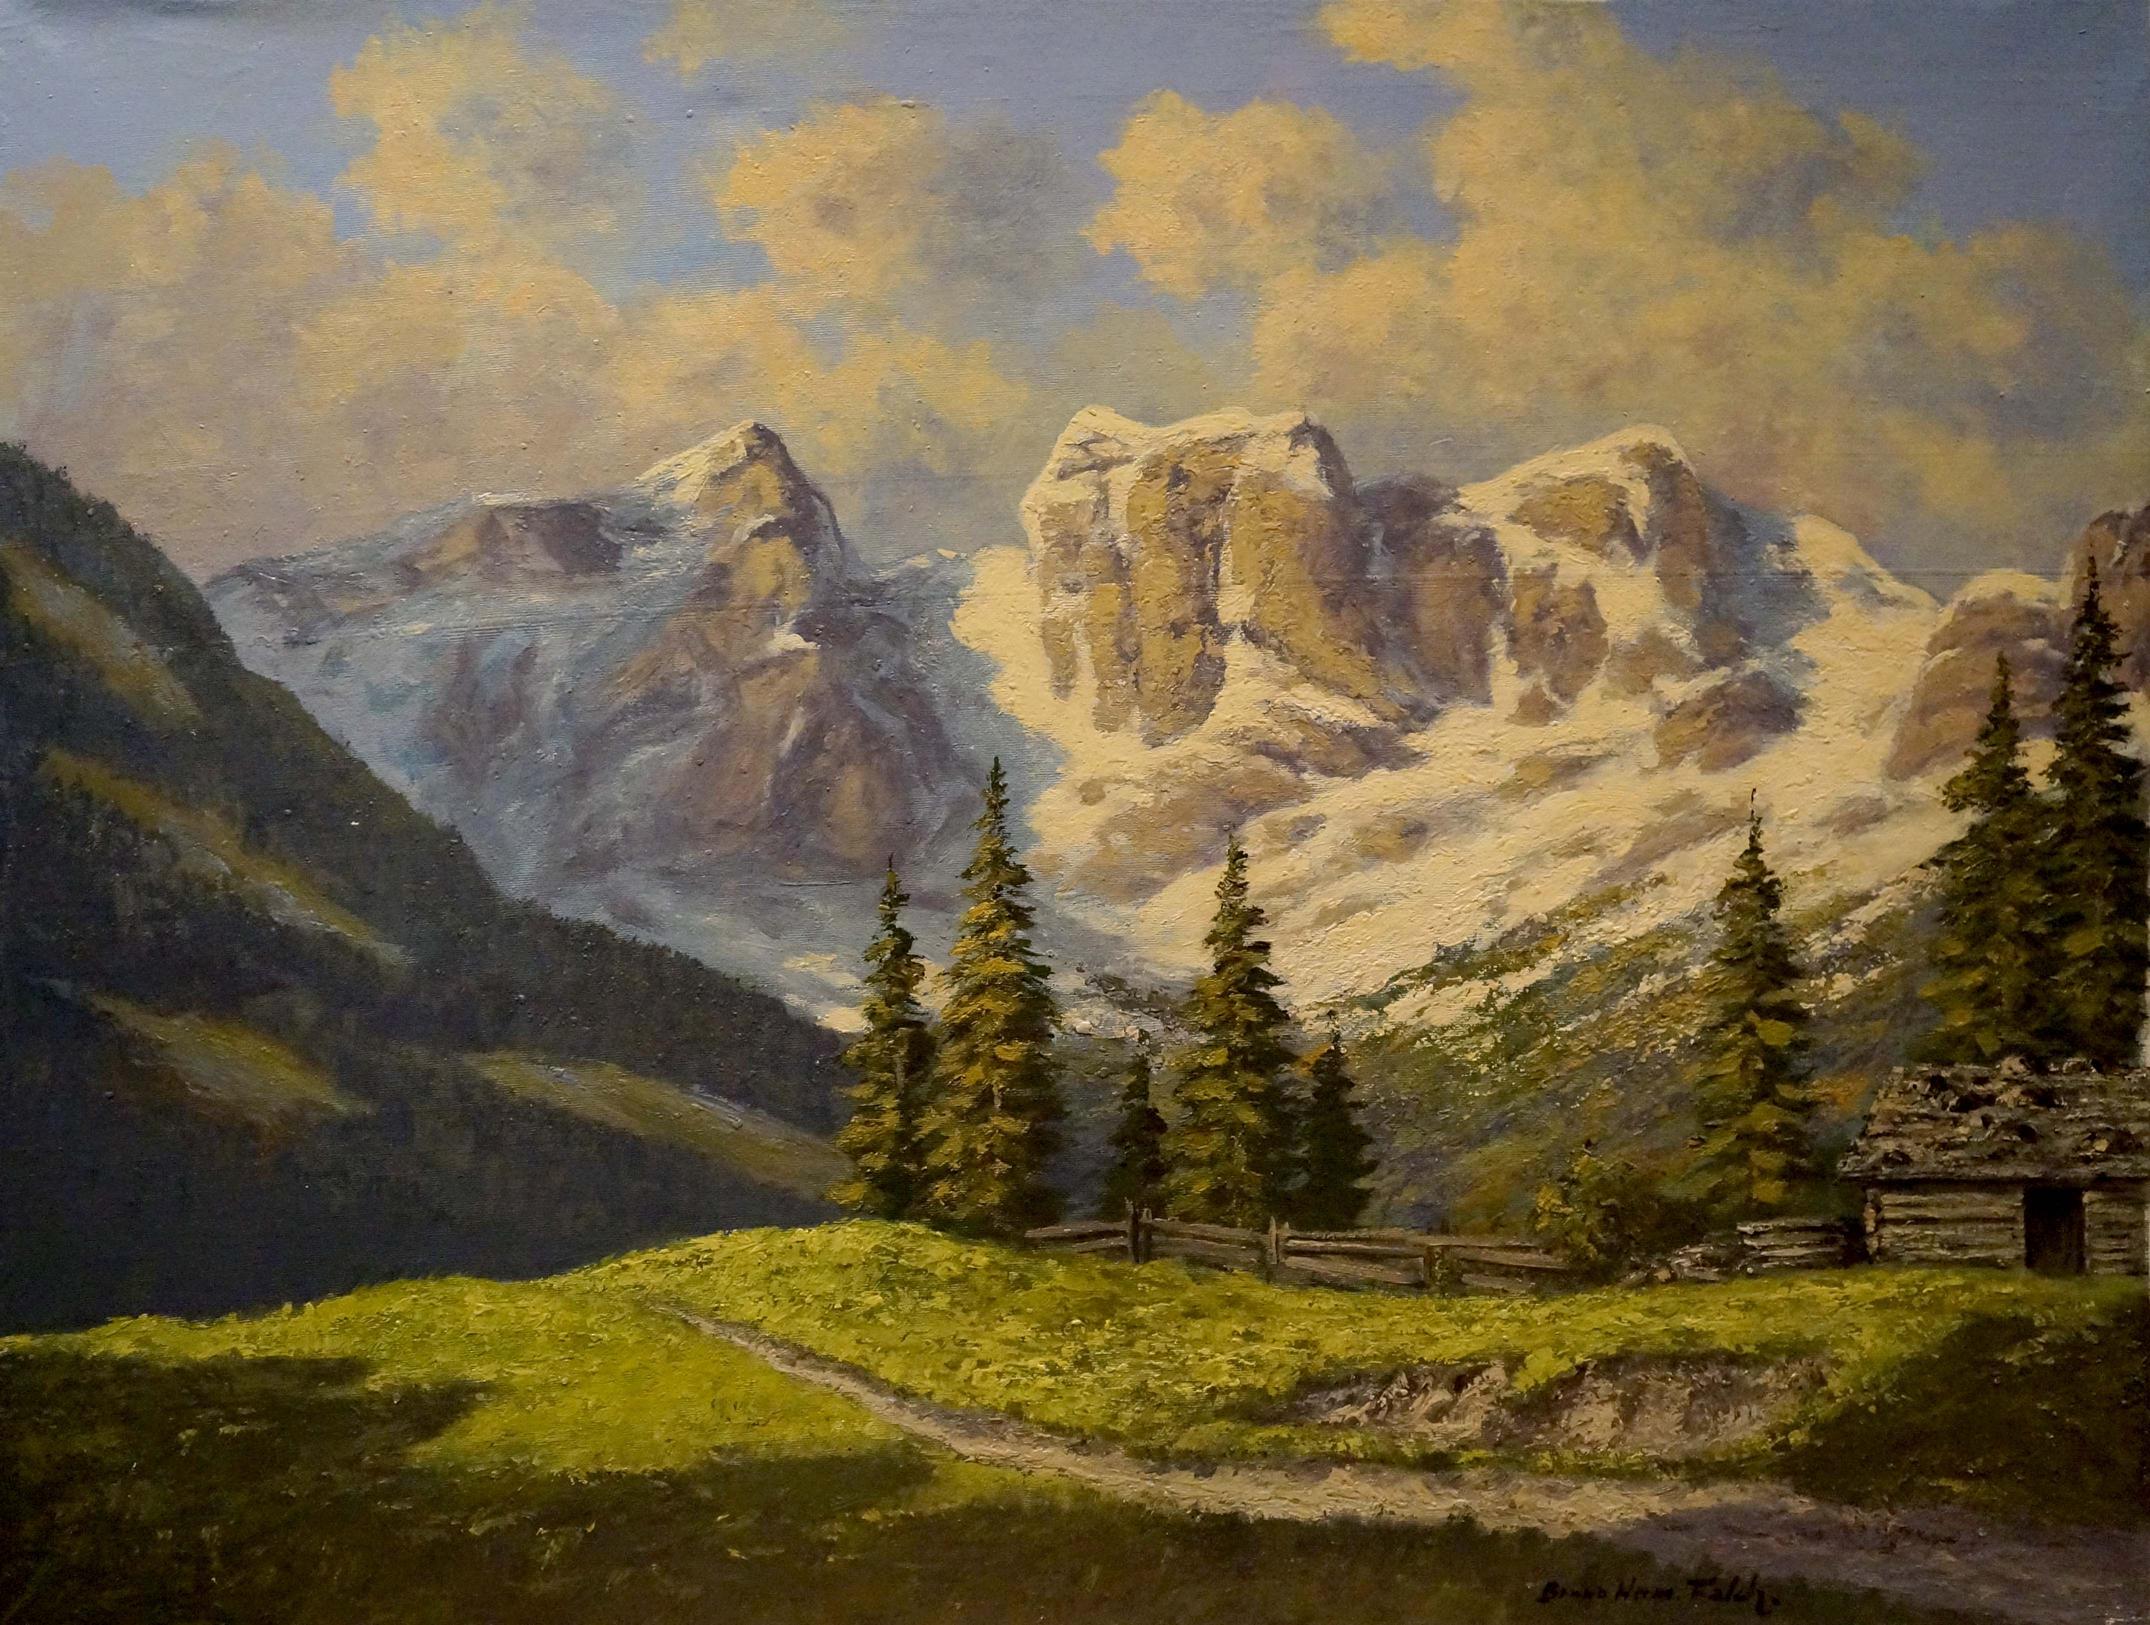 Oil painting Walk near the mountains European artist